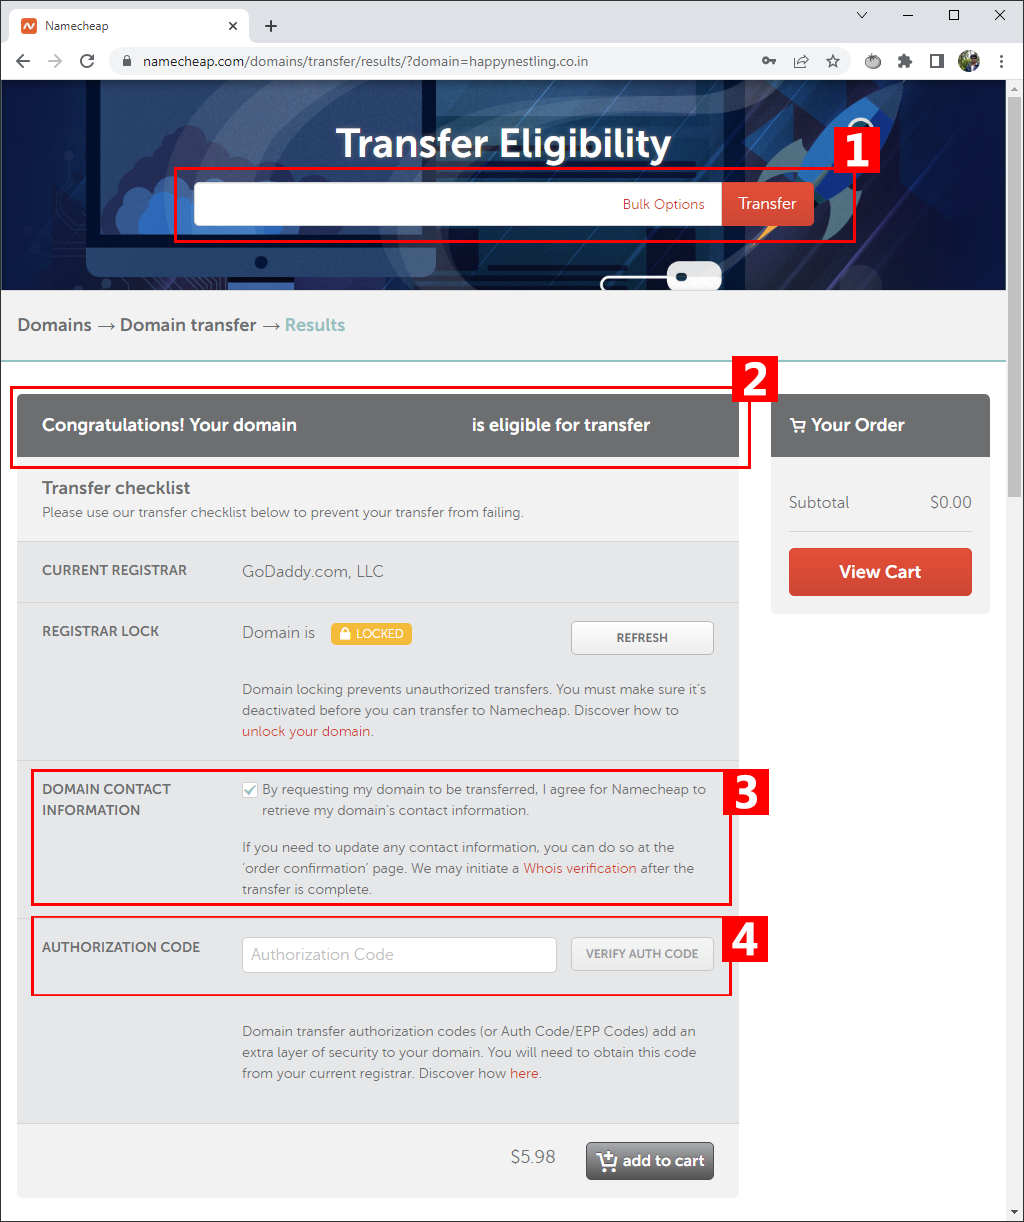 08 Transfer Eligibility and Authorization Code - Godaddy to NameCheap